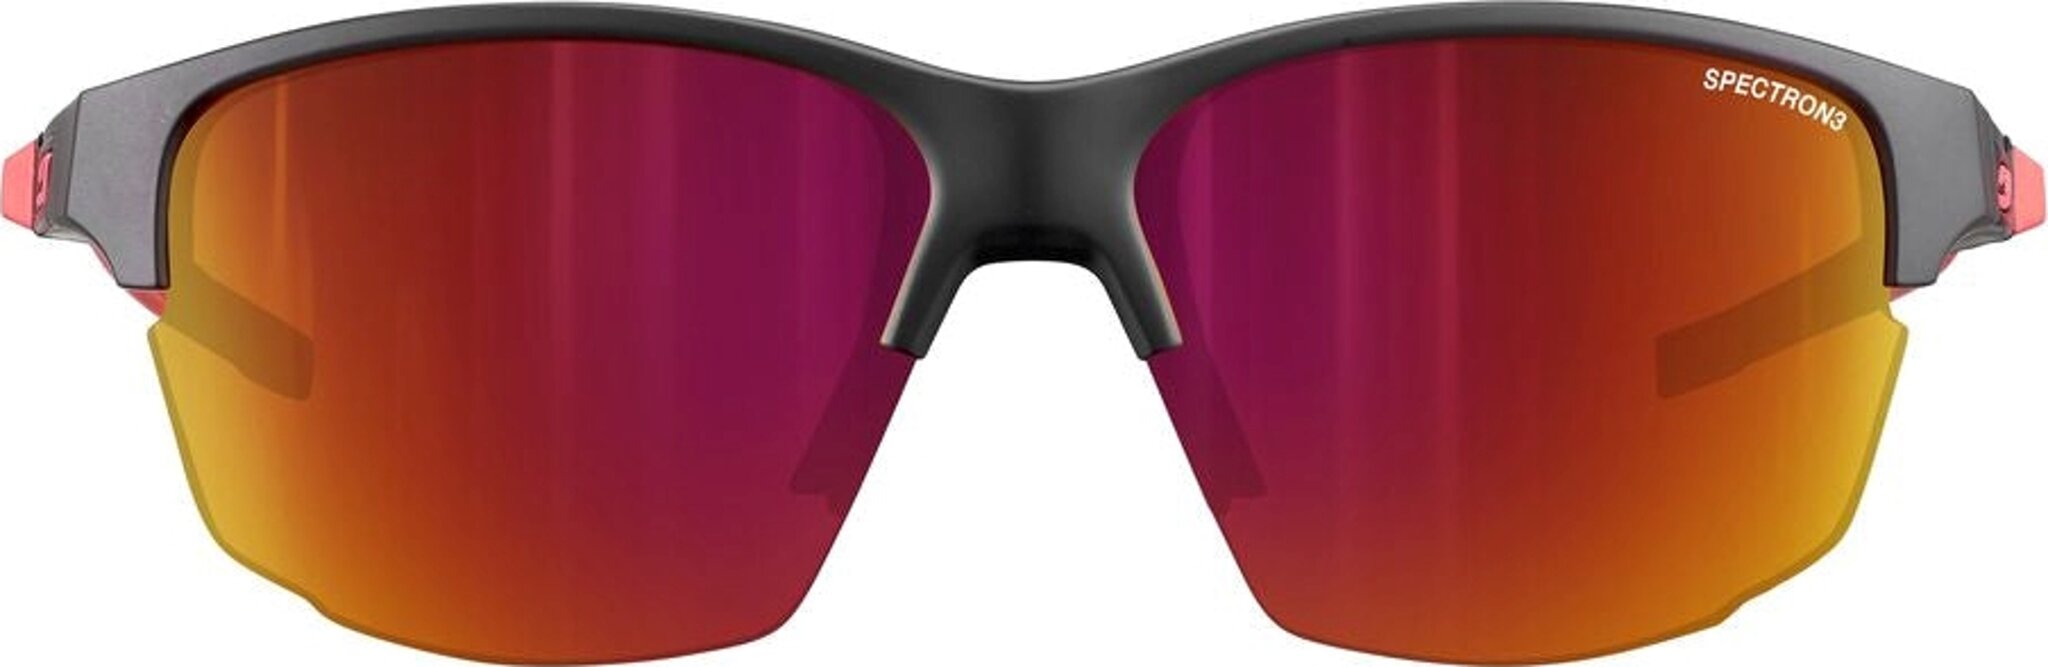 Julbo Split Spectron 3 Sunglasses - Unisex | Altitude Sports